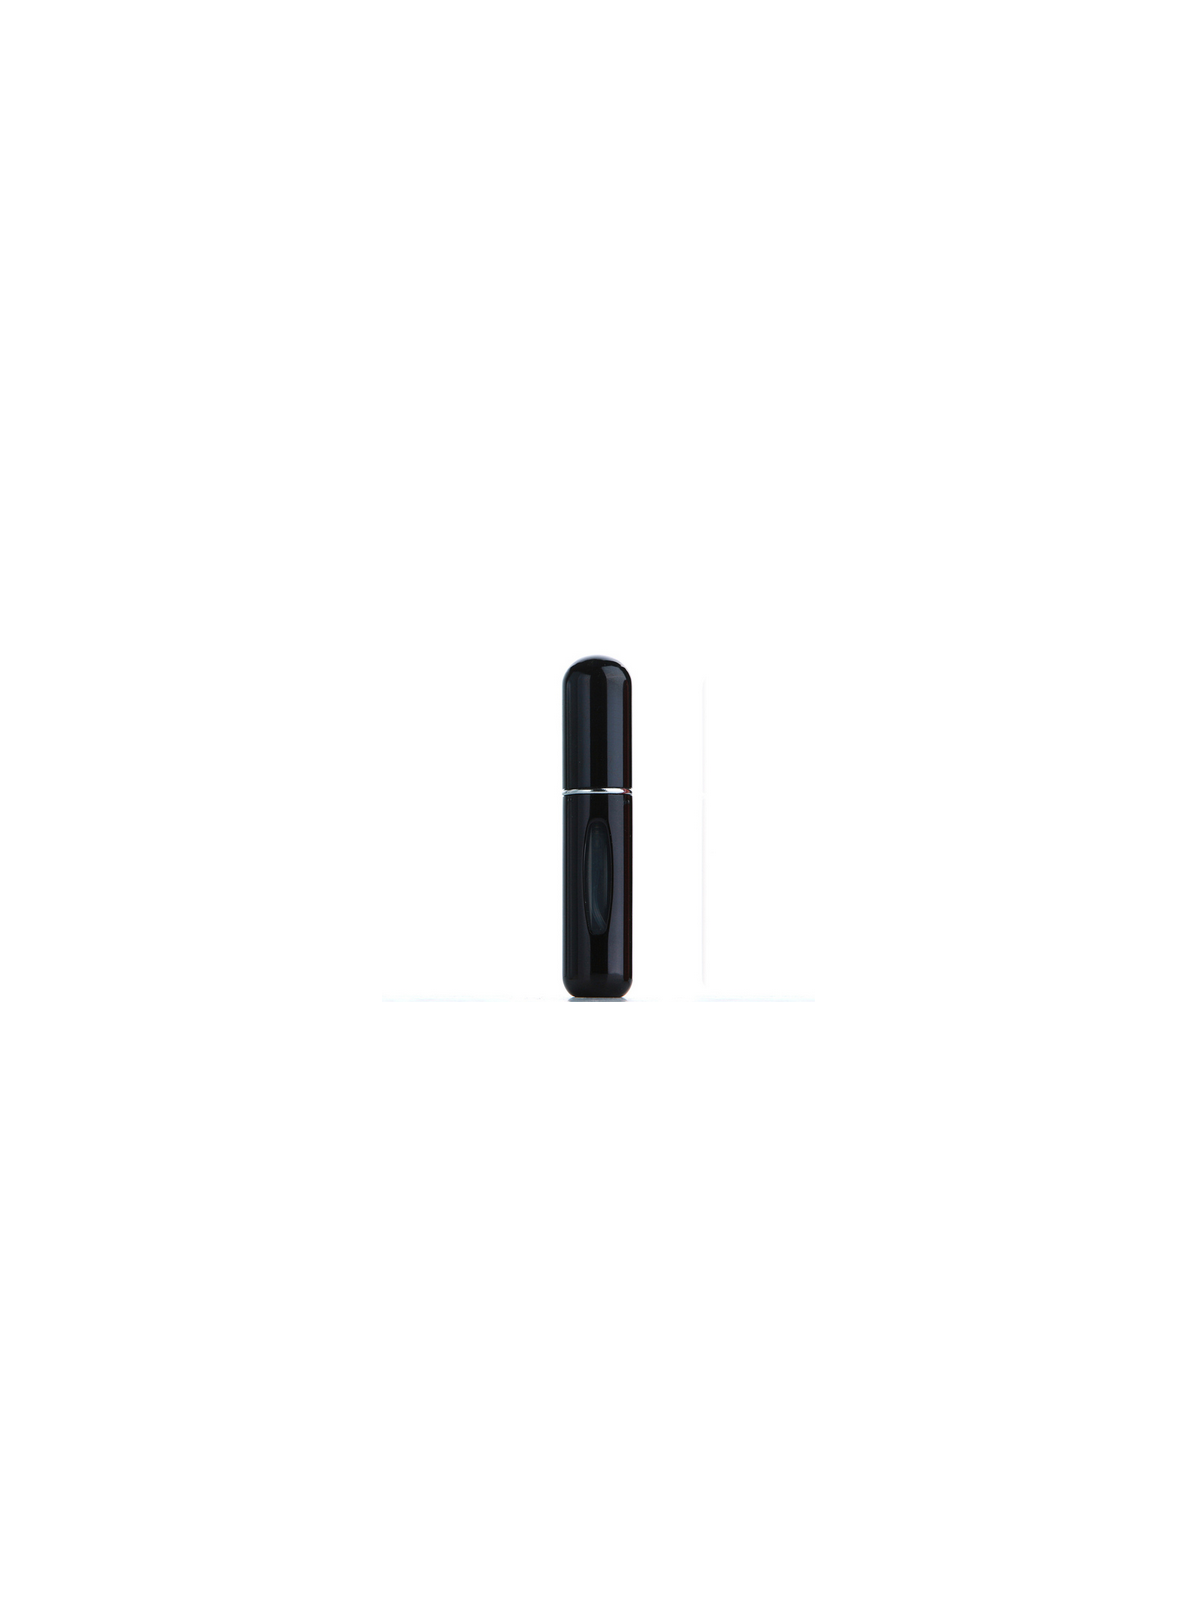 Flacone tascabile 5ml nero